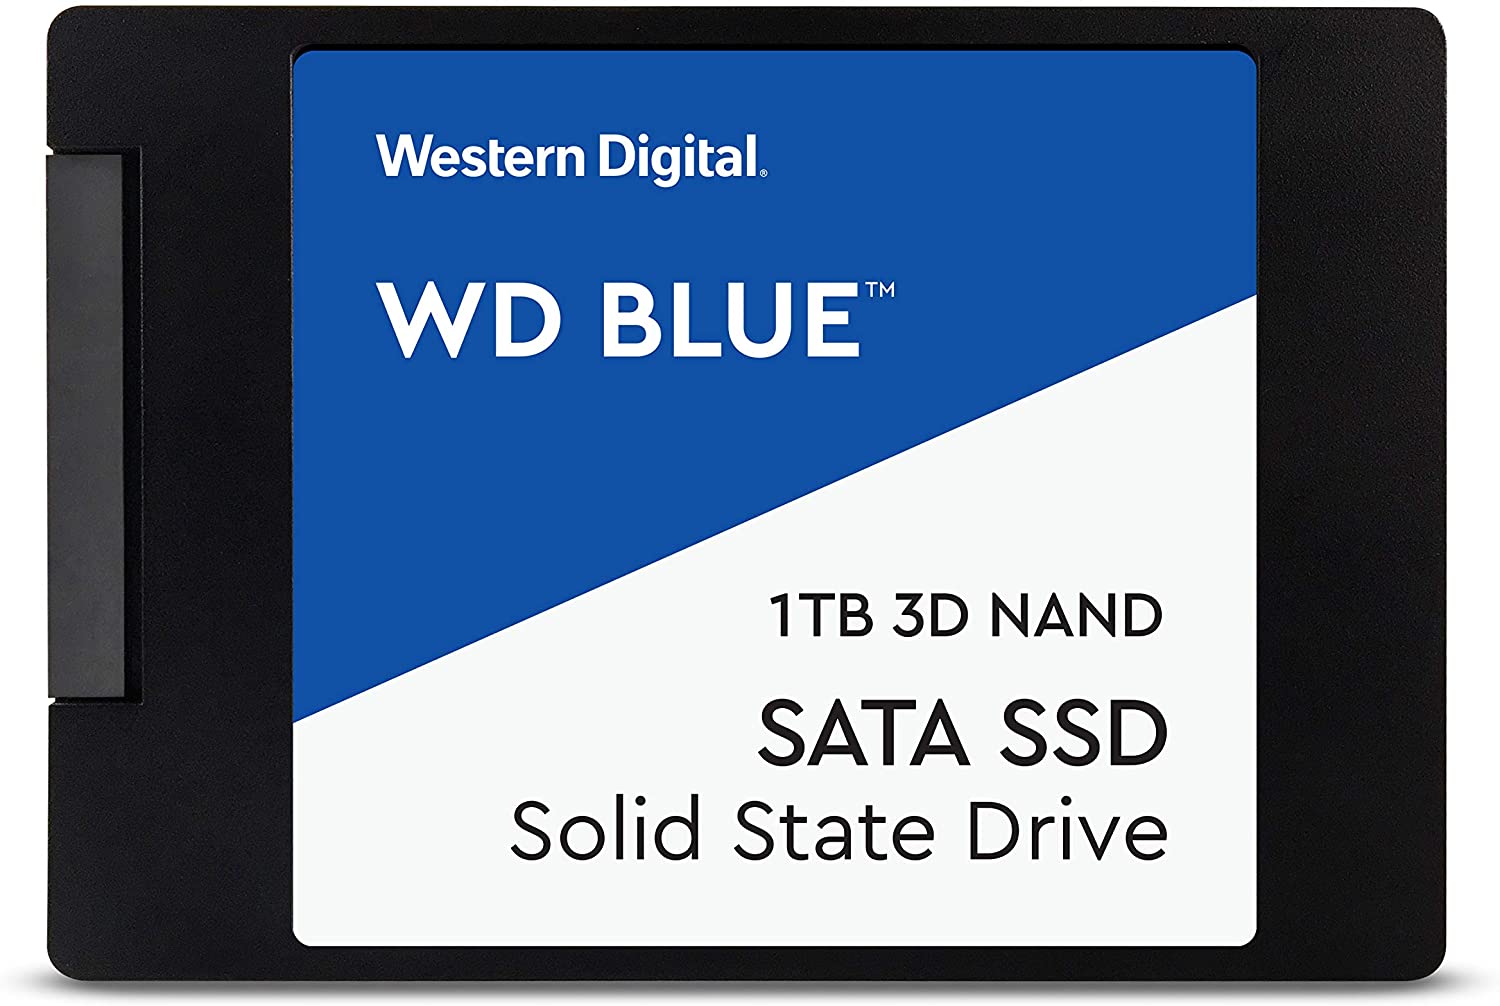 WD Blue 3D NAND SATA